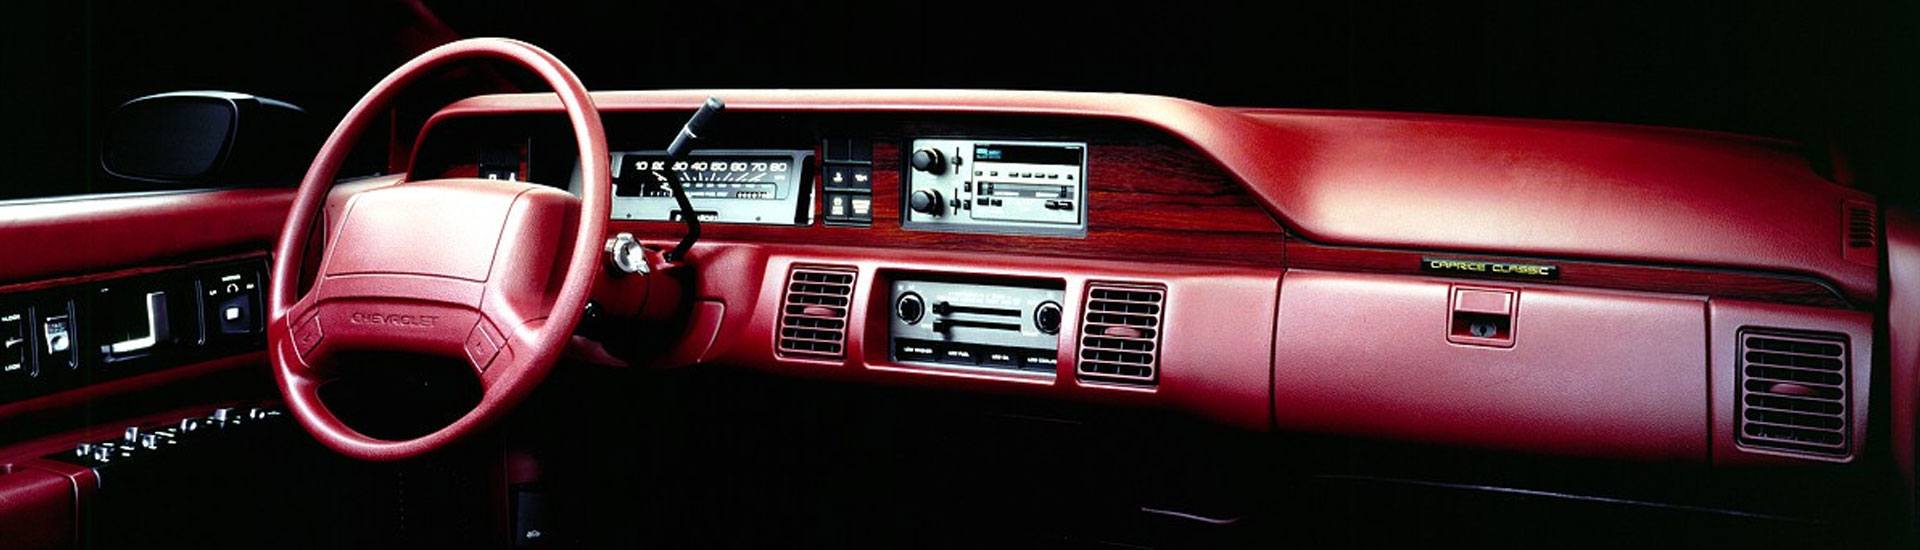 1991 Chevrolet Caprice Dash Kits